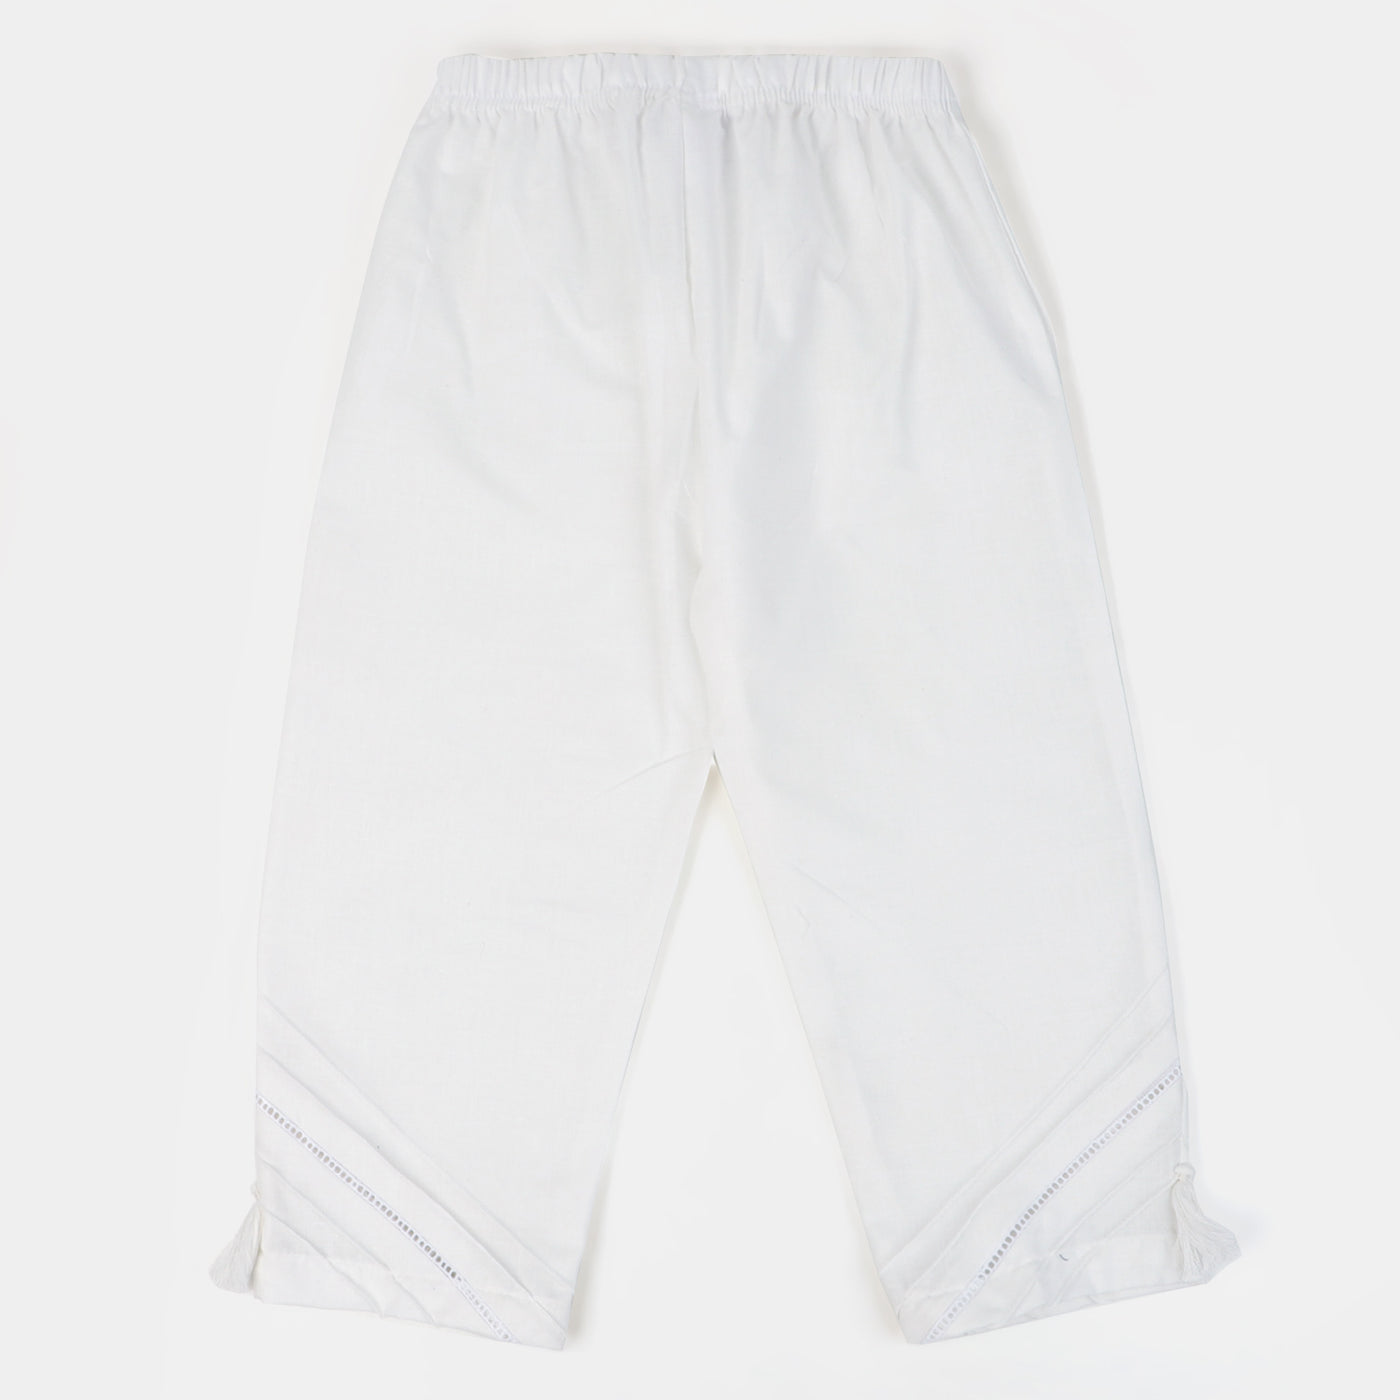 Girls Cotton Eastern Pant | White